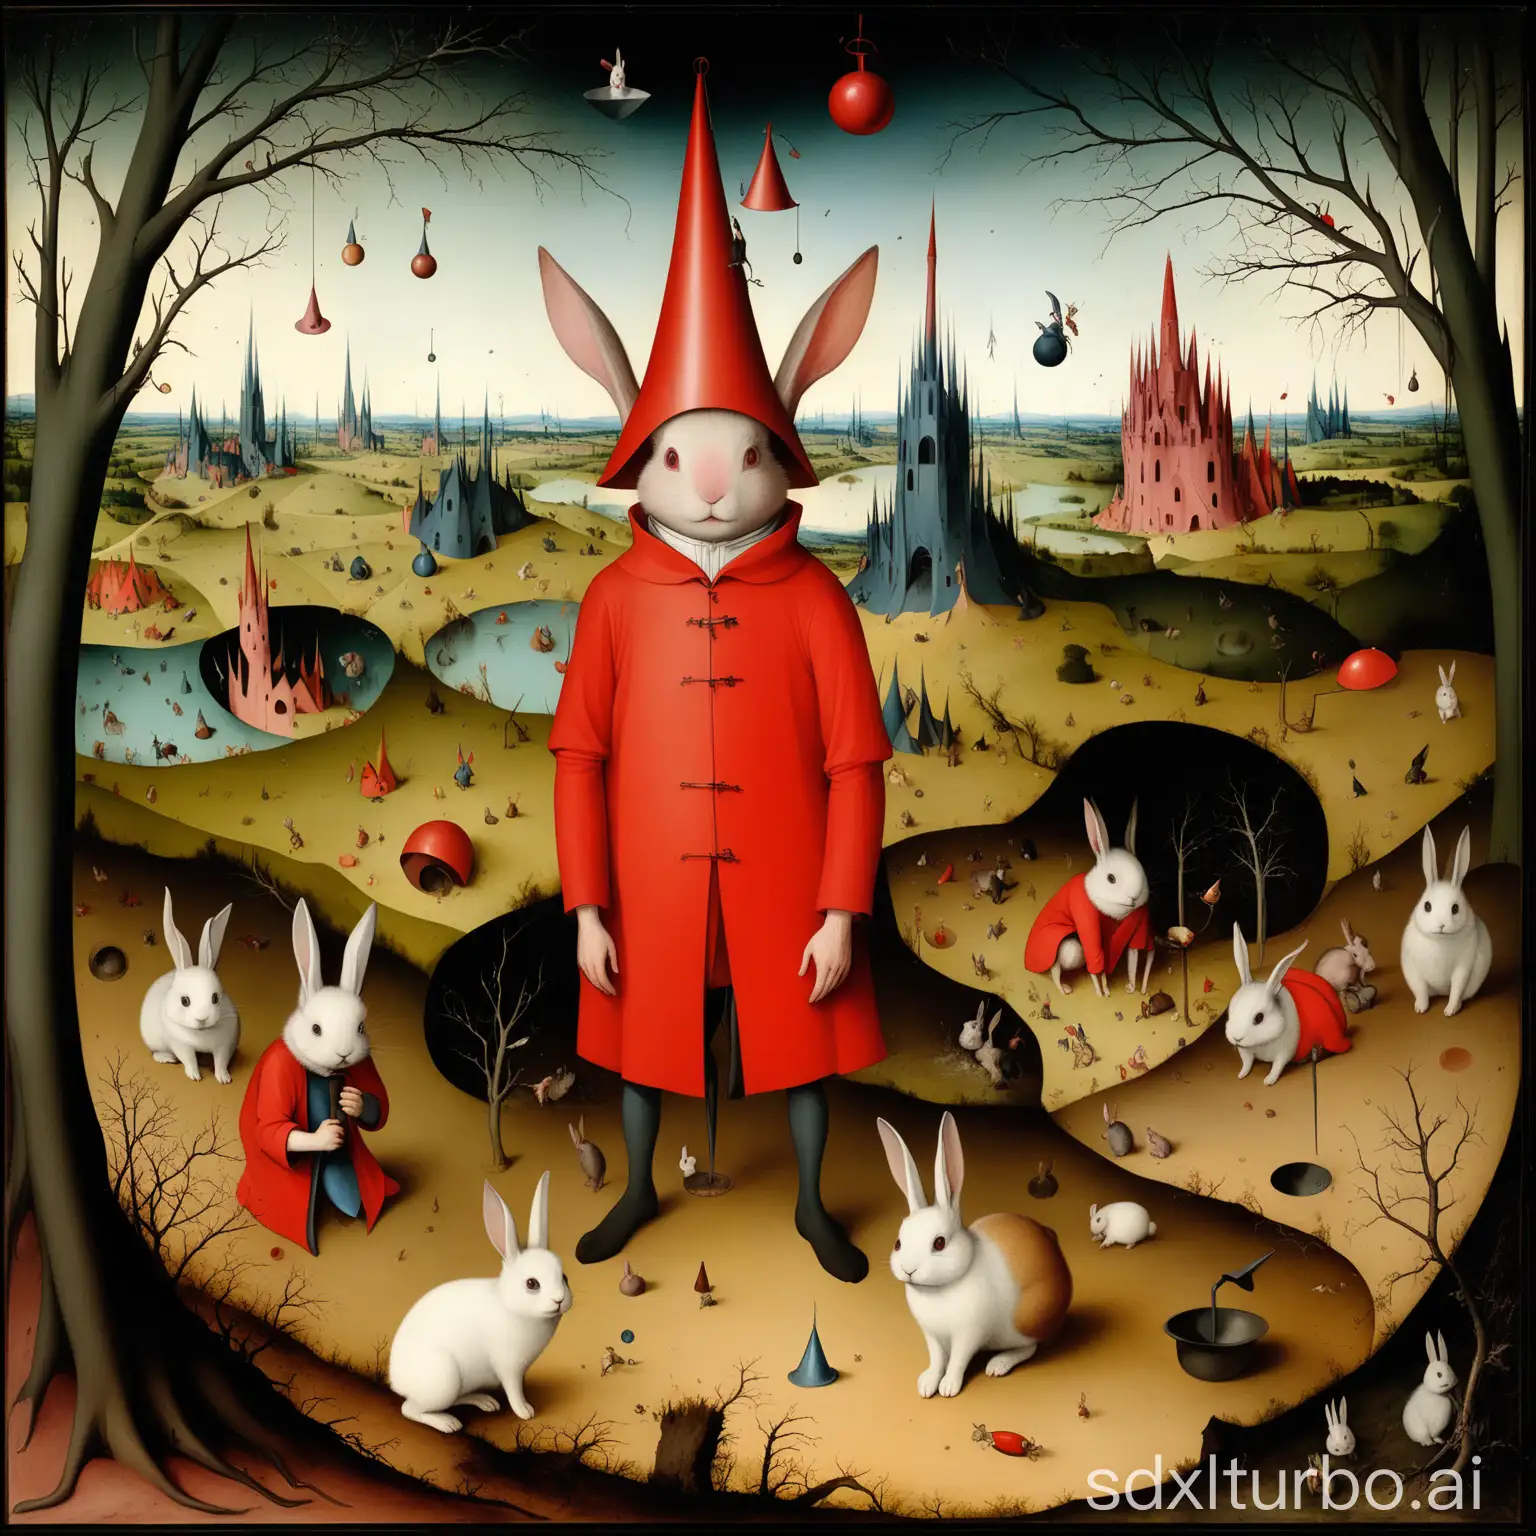 Mischievous-Rabbit-Creature-in-Red-Coat-amidst-Surreal-Landscape